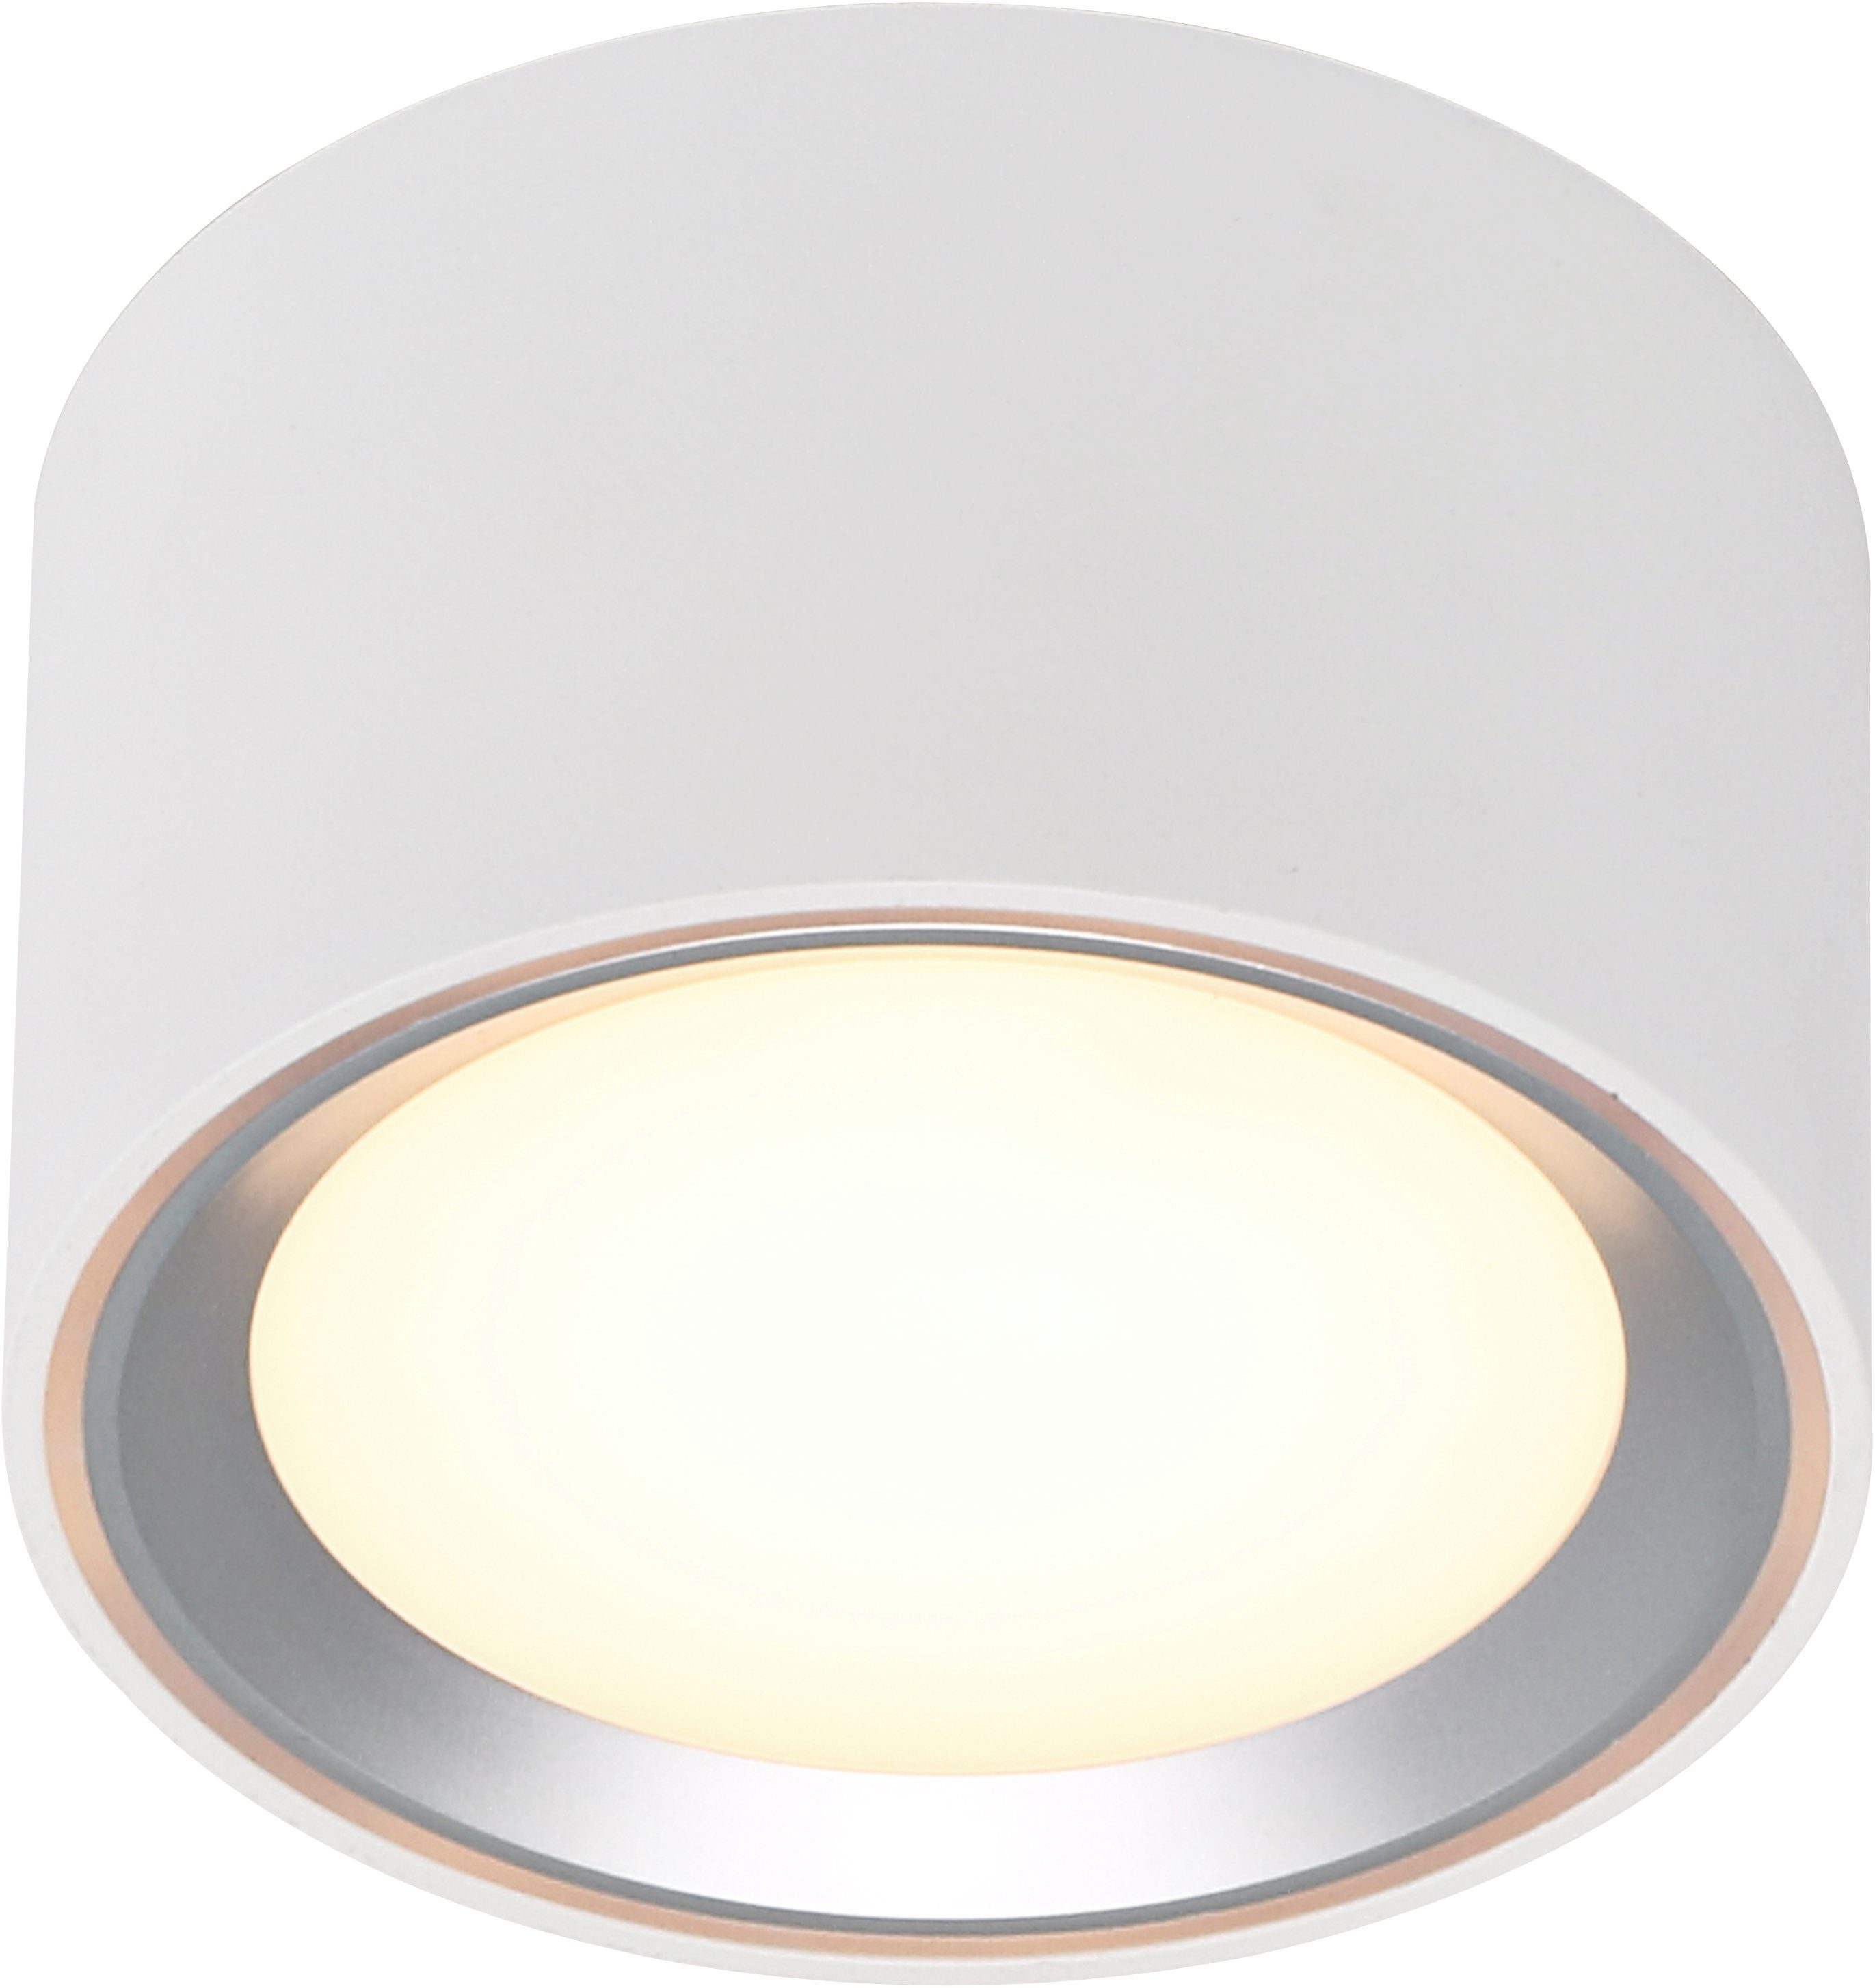 Nordlux LED Deckenspot Fallon, Dimmfunktion, LED fest integriert, Warmweiß, LED Deckenleuchte, LED Deckenlampe | Deckenstrahler